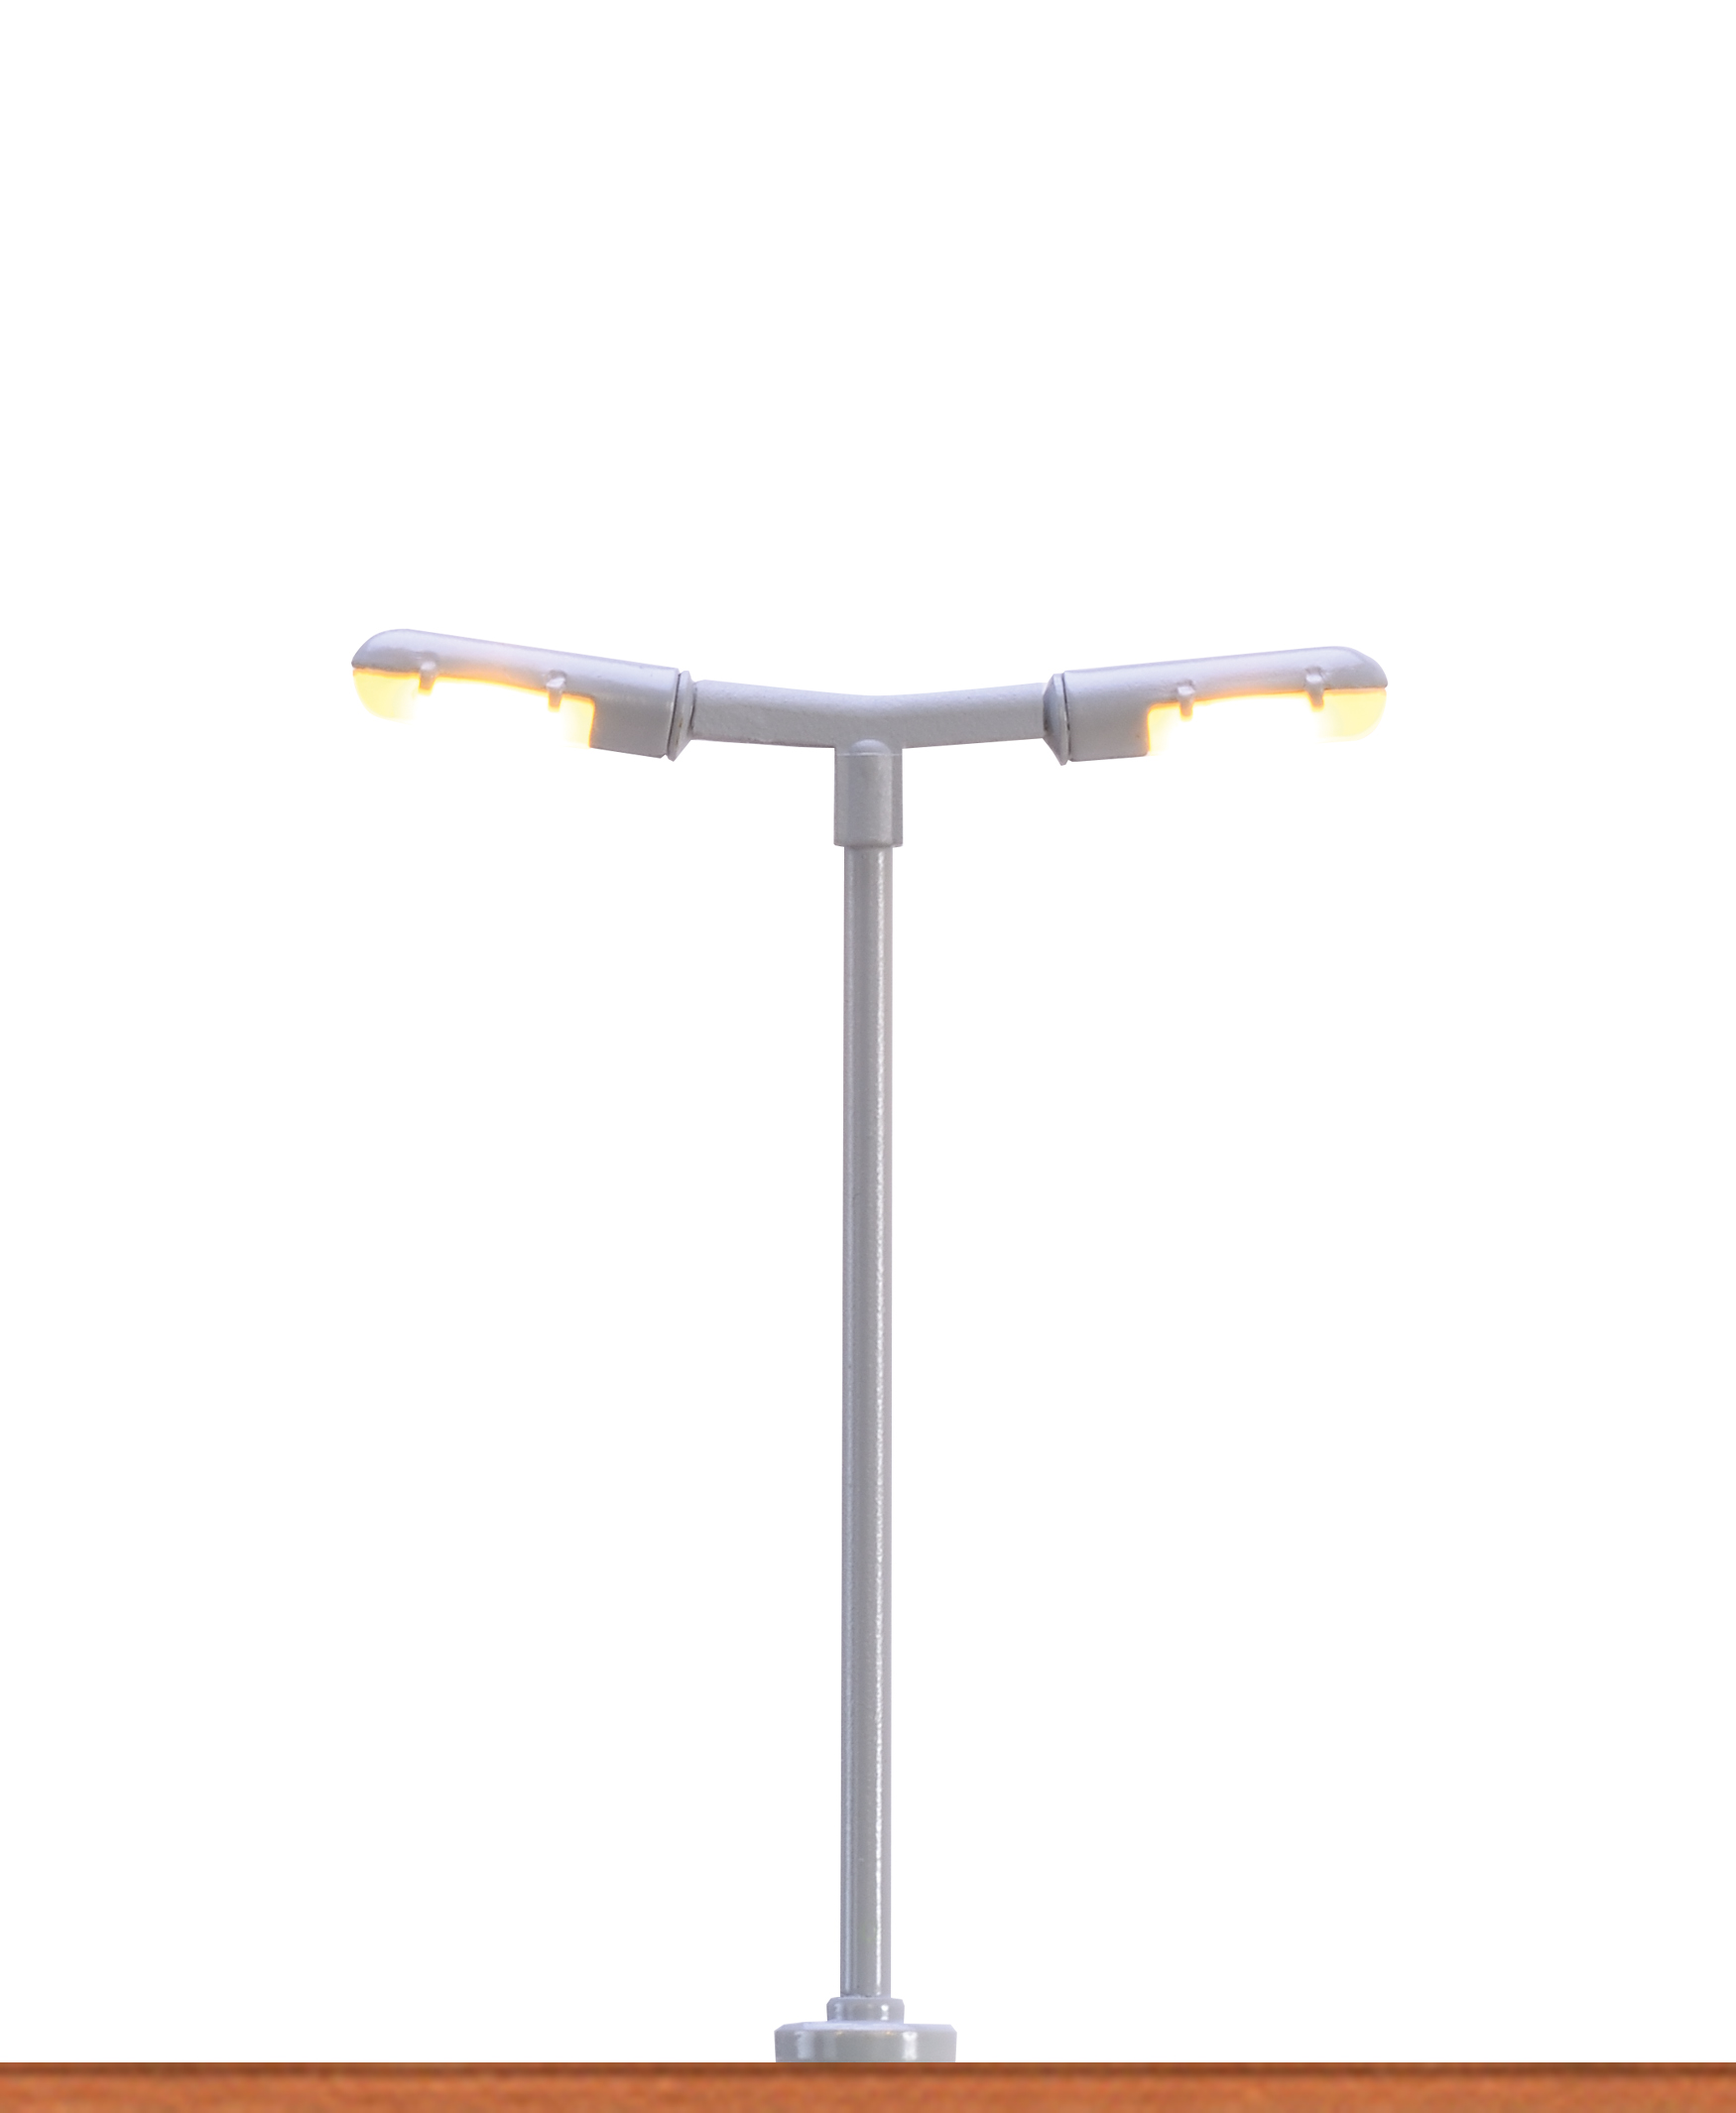 Bahnsteigleuchte, 2-fach LED, Stecksockeltechnik, Höhe 55 mm, N